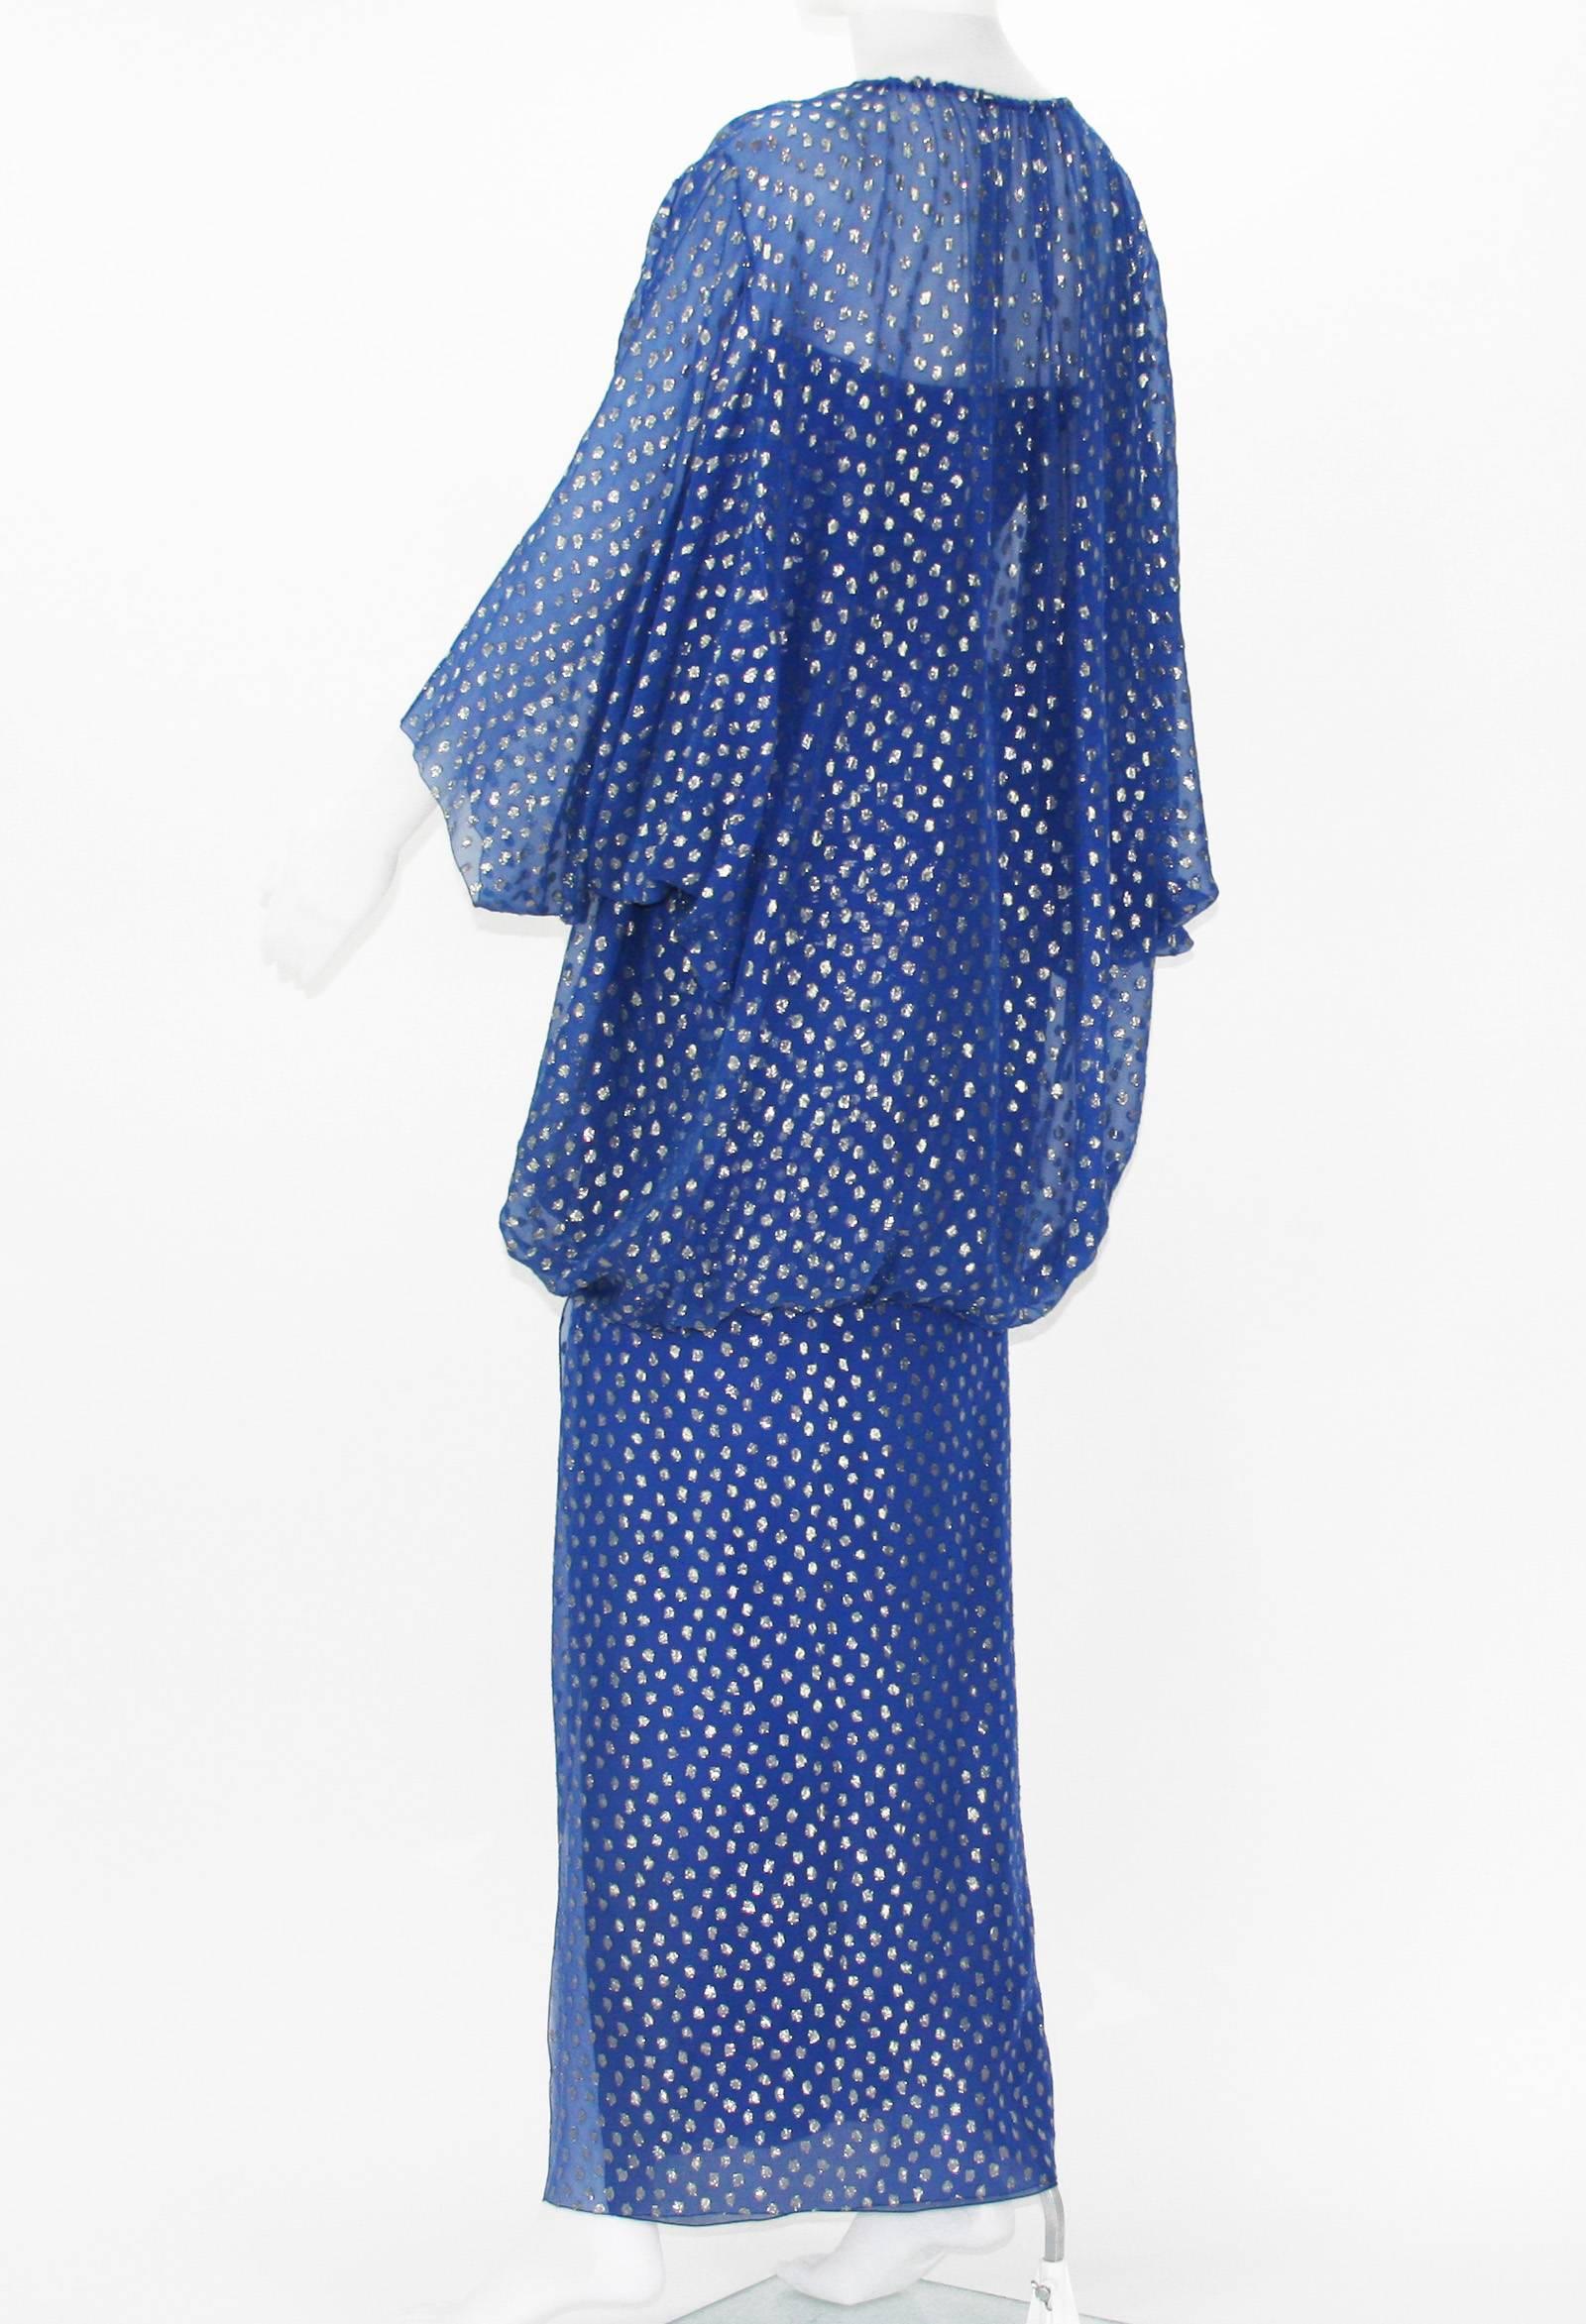 Women's Christian Dior Paris F/W 1976 Numbered Polka Dot Blue Sheer Dress Set